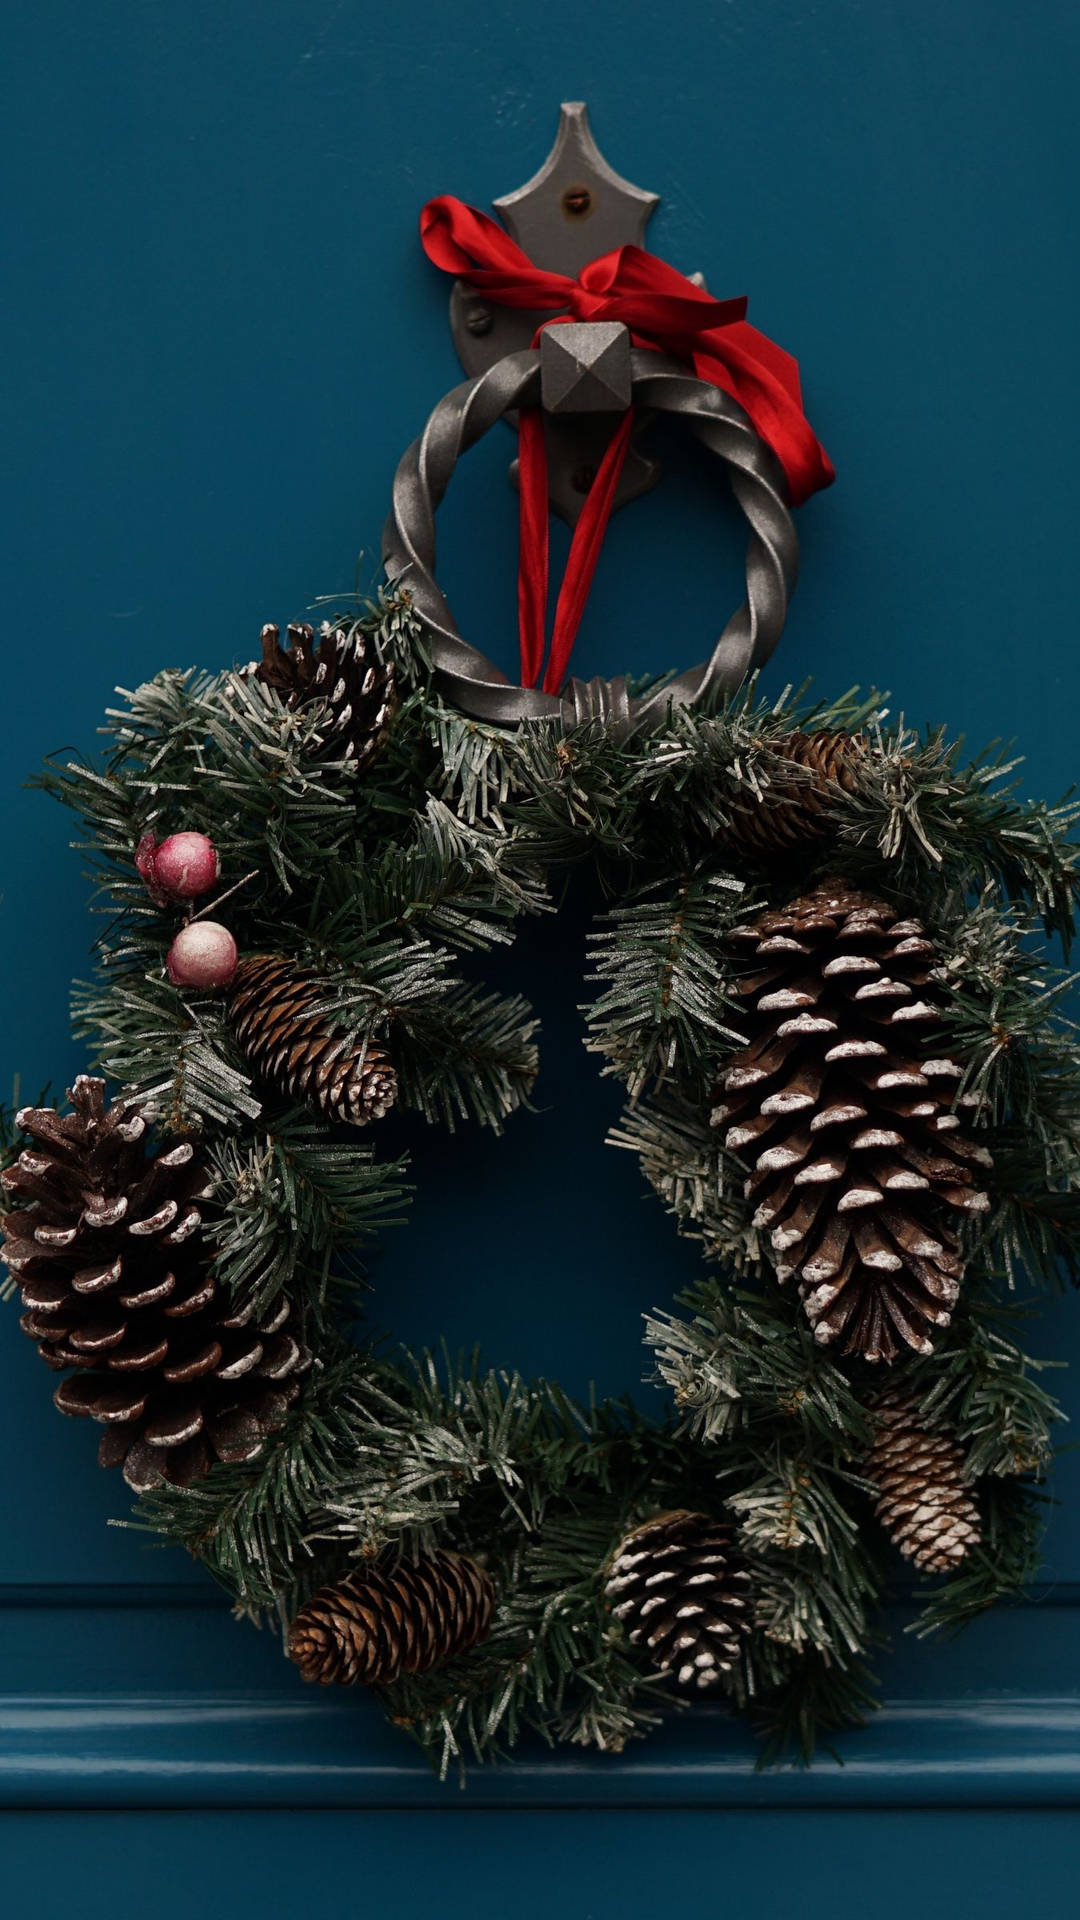 Caption: Festive Christmas Wreath Embellished With Pinecones Background